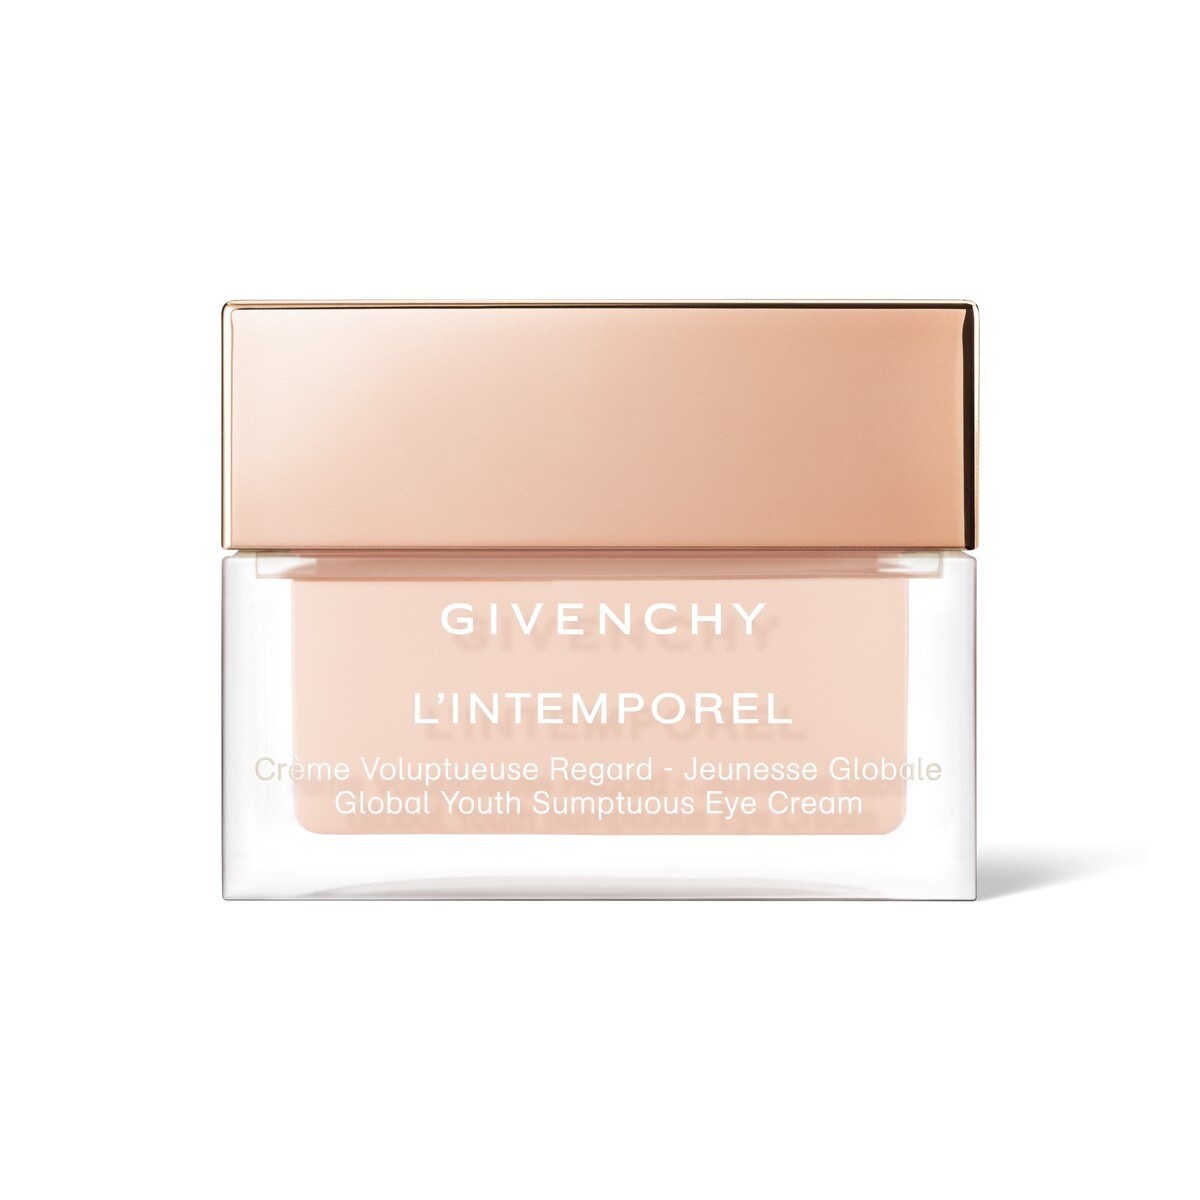 Givenchy Očný krém L`Intemporel (Global Youth Sumptuous Eye Cream) 15 ml